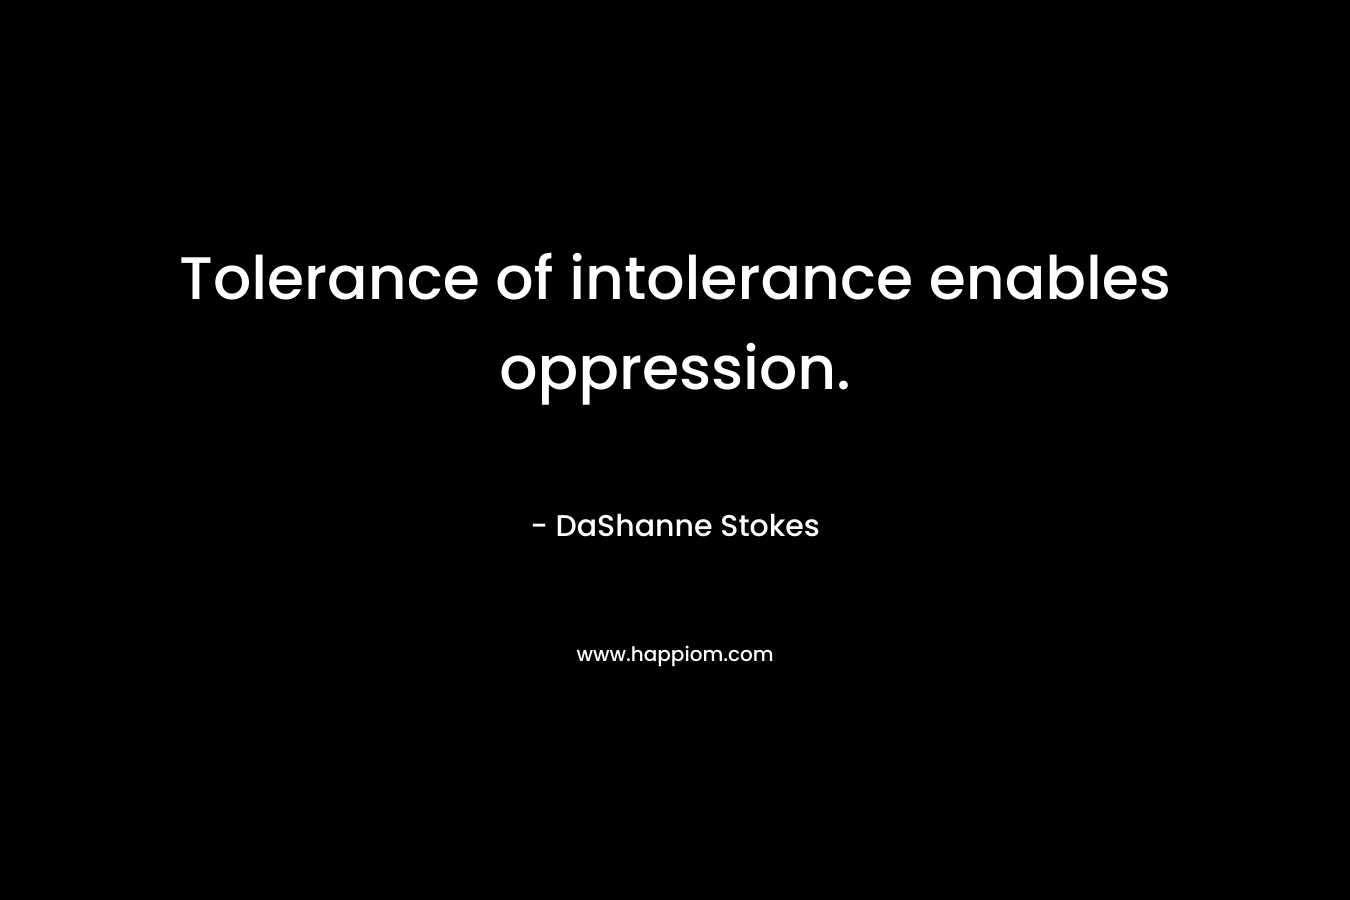 Tolerance of intolerance enables oppression. – DaShanne Stokes